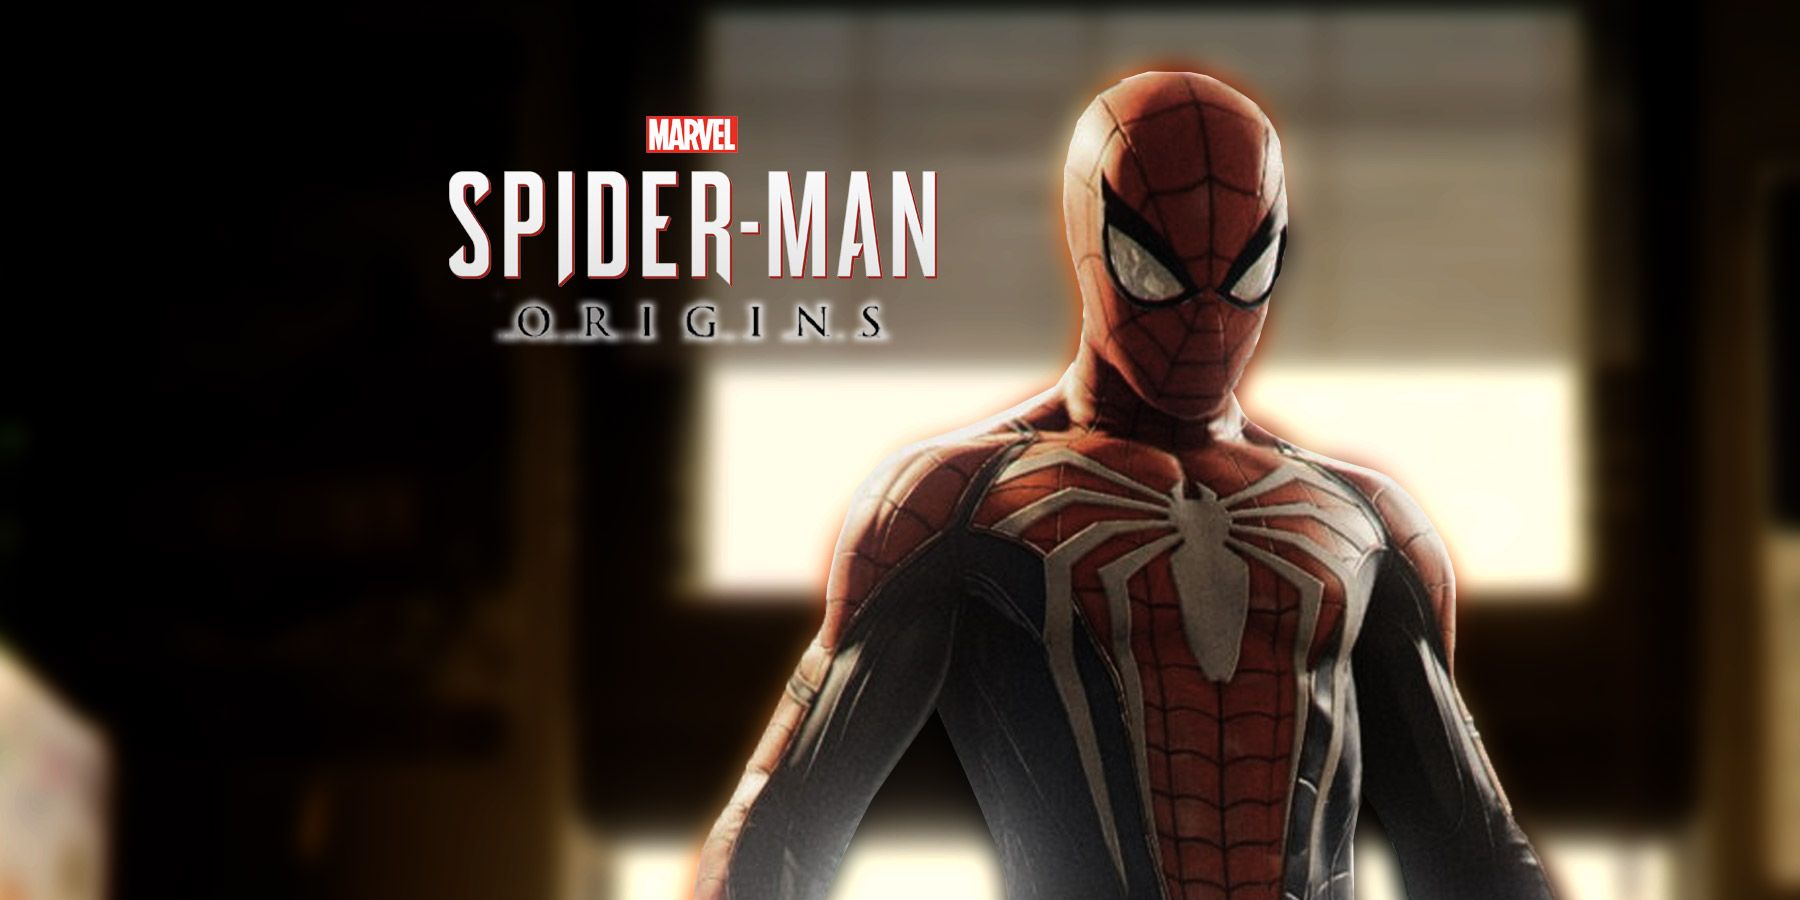 Marvels Spider-Man-serie burde få en prequel som Batman: Arkham Origins